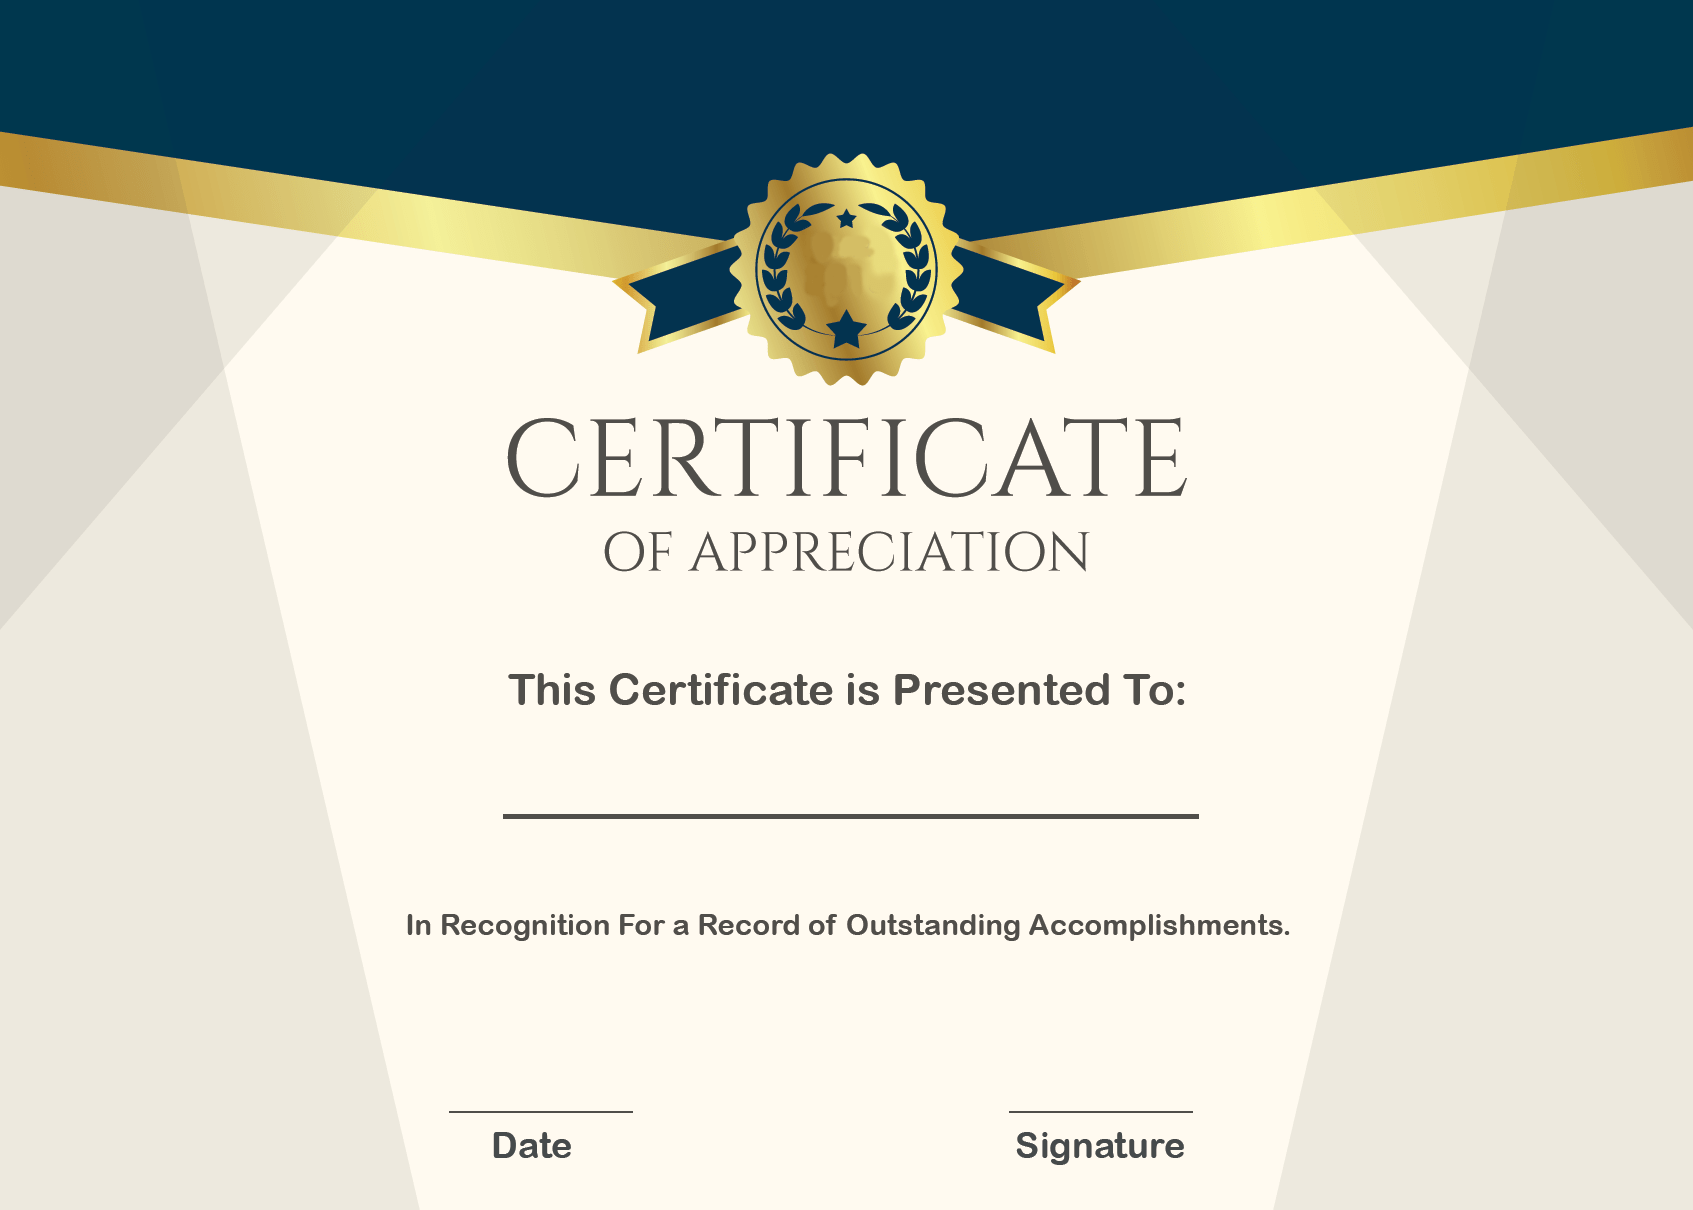 Certificate of Appreciation Wording Example